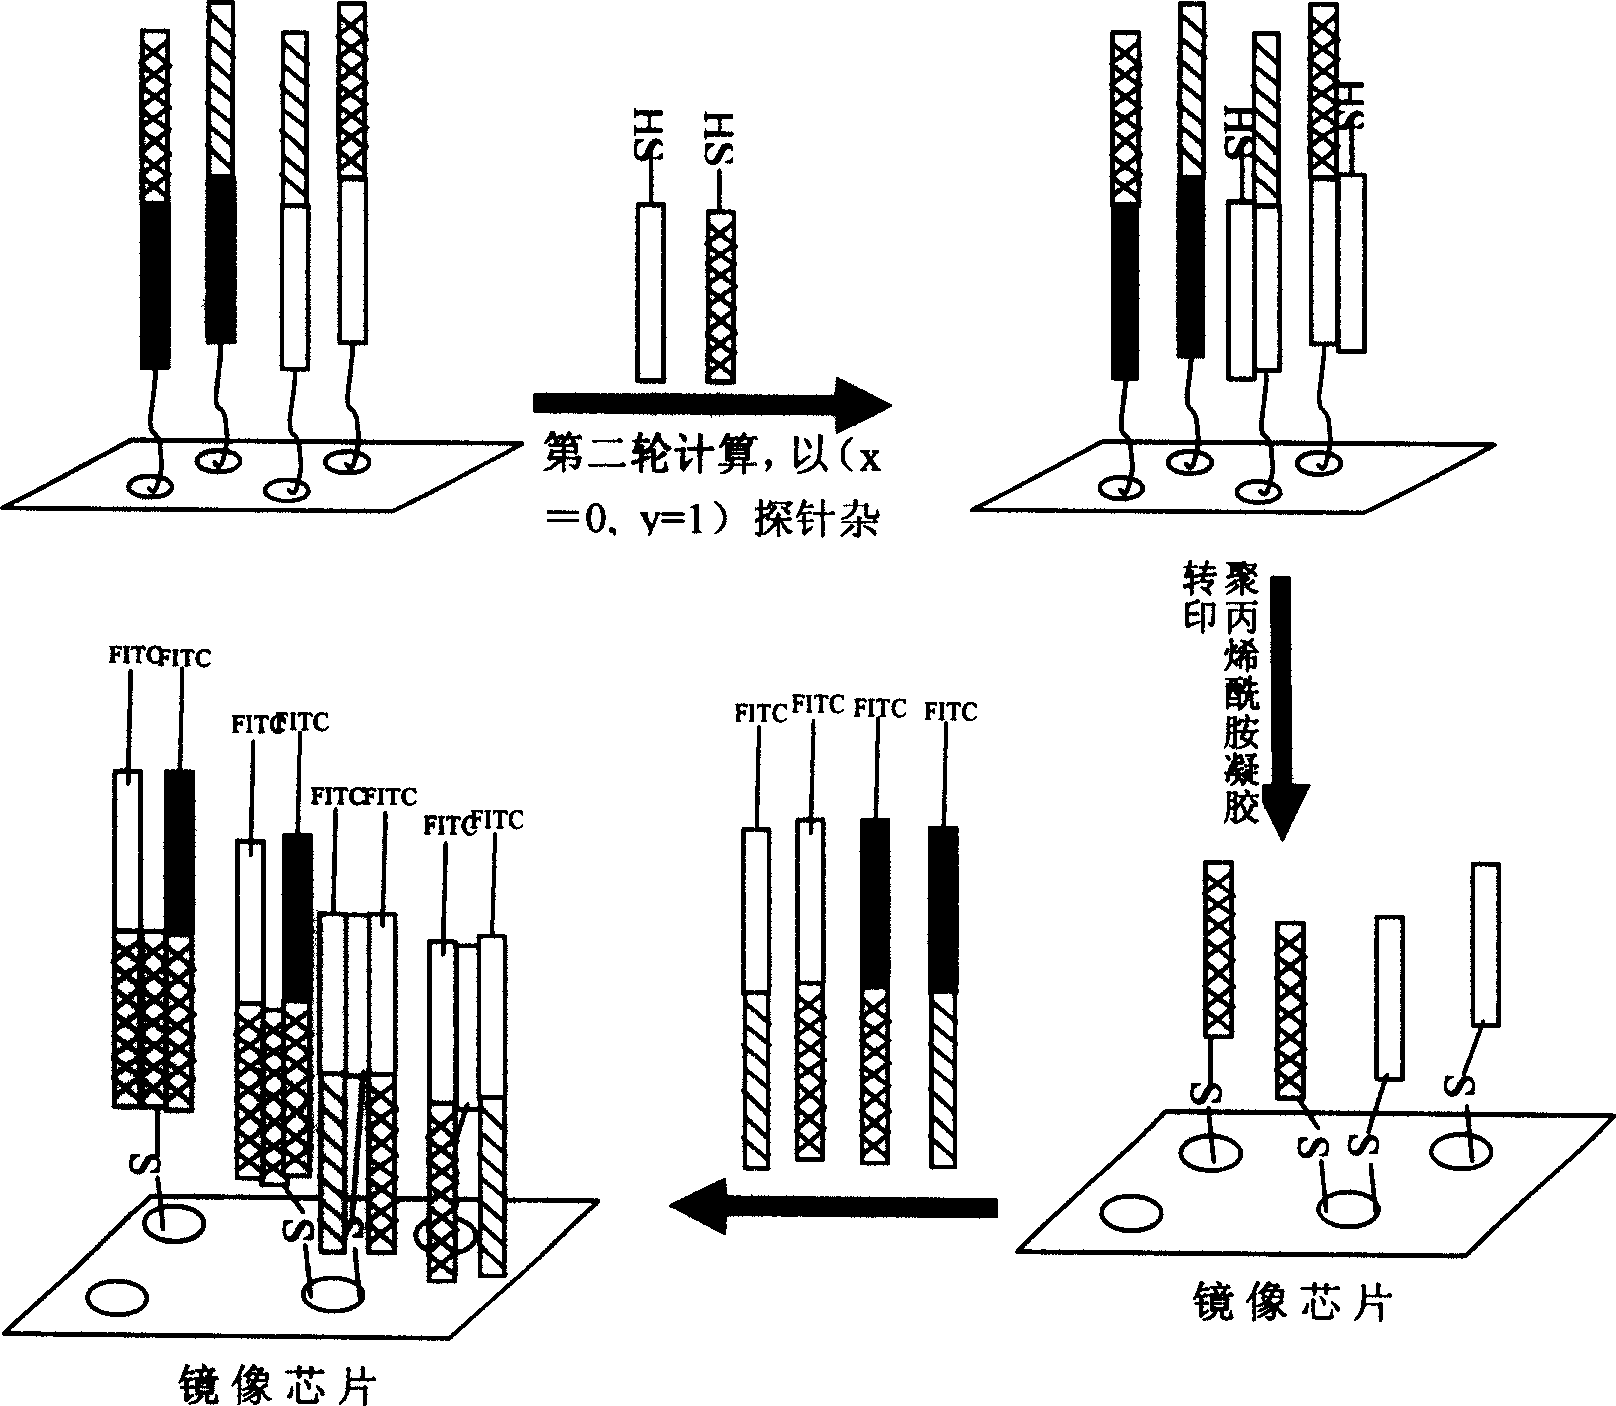 Chip copying method for DNA computation